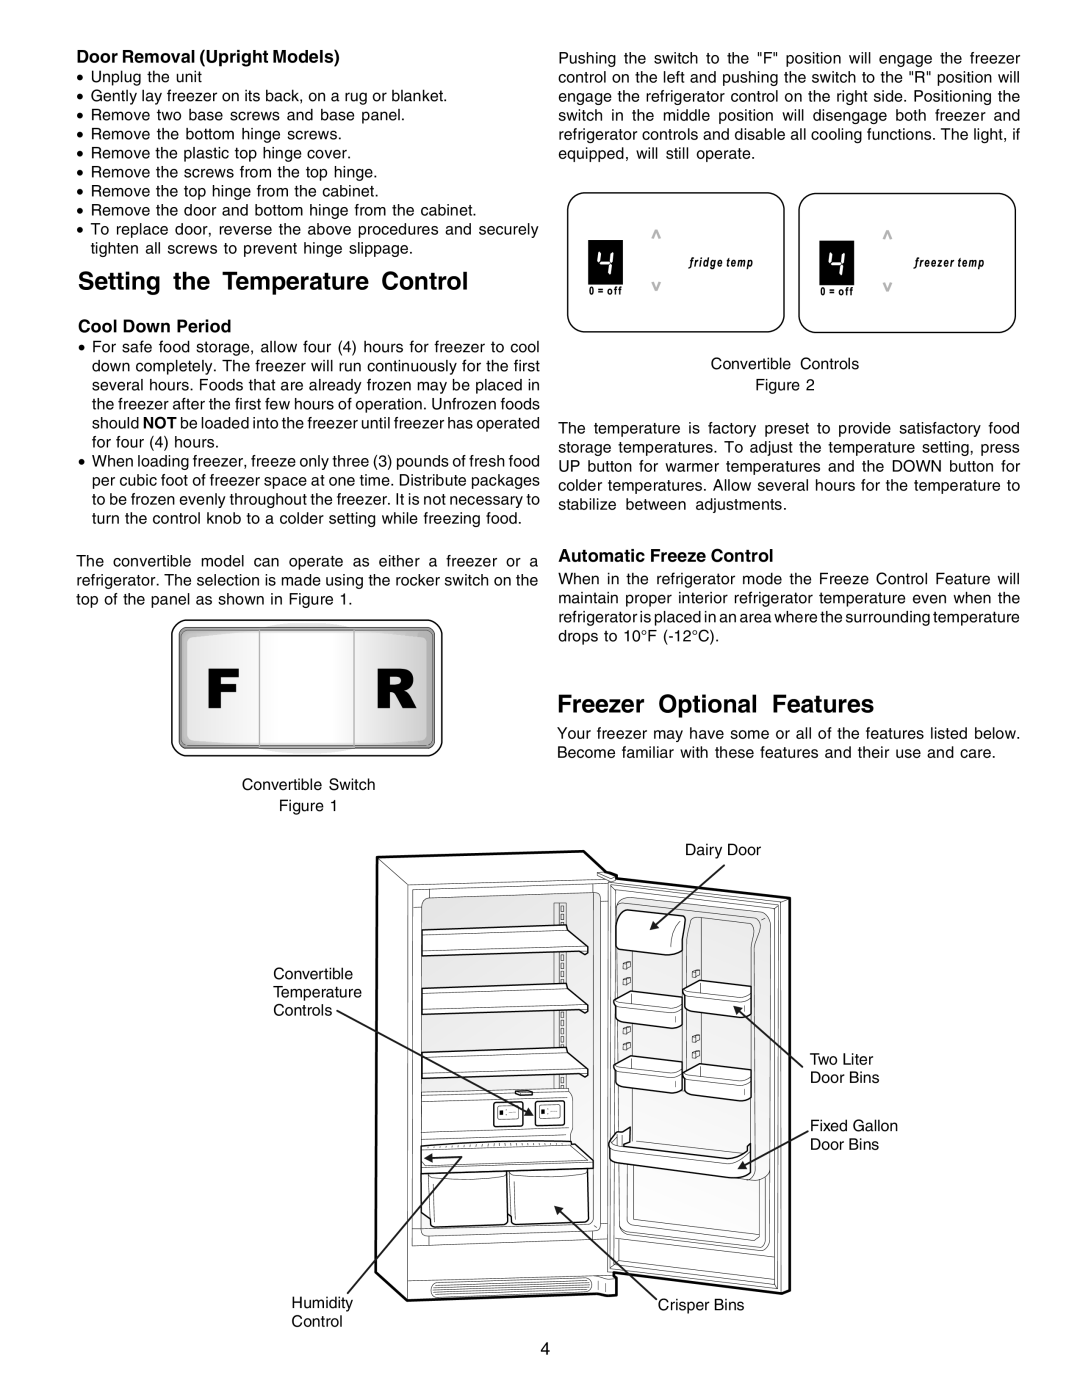 Frigidaire 297245000, FKCH17F7HW Door Removal Upright Models, Cool Down Period, Automatic Freeze Control 